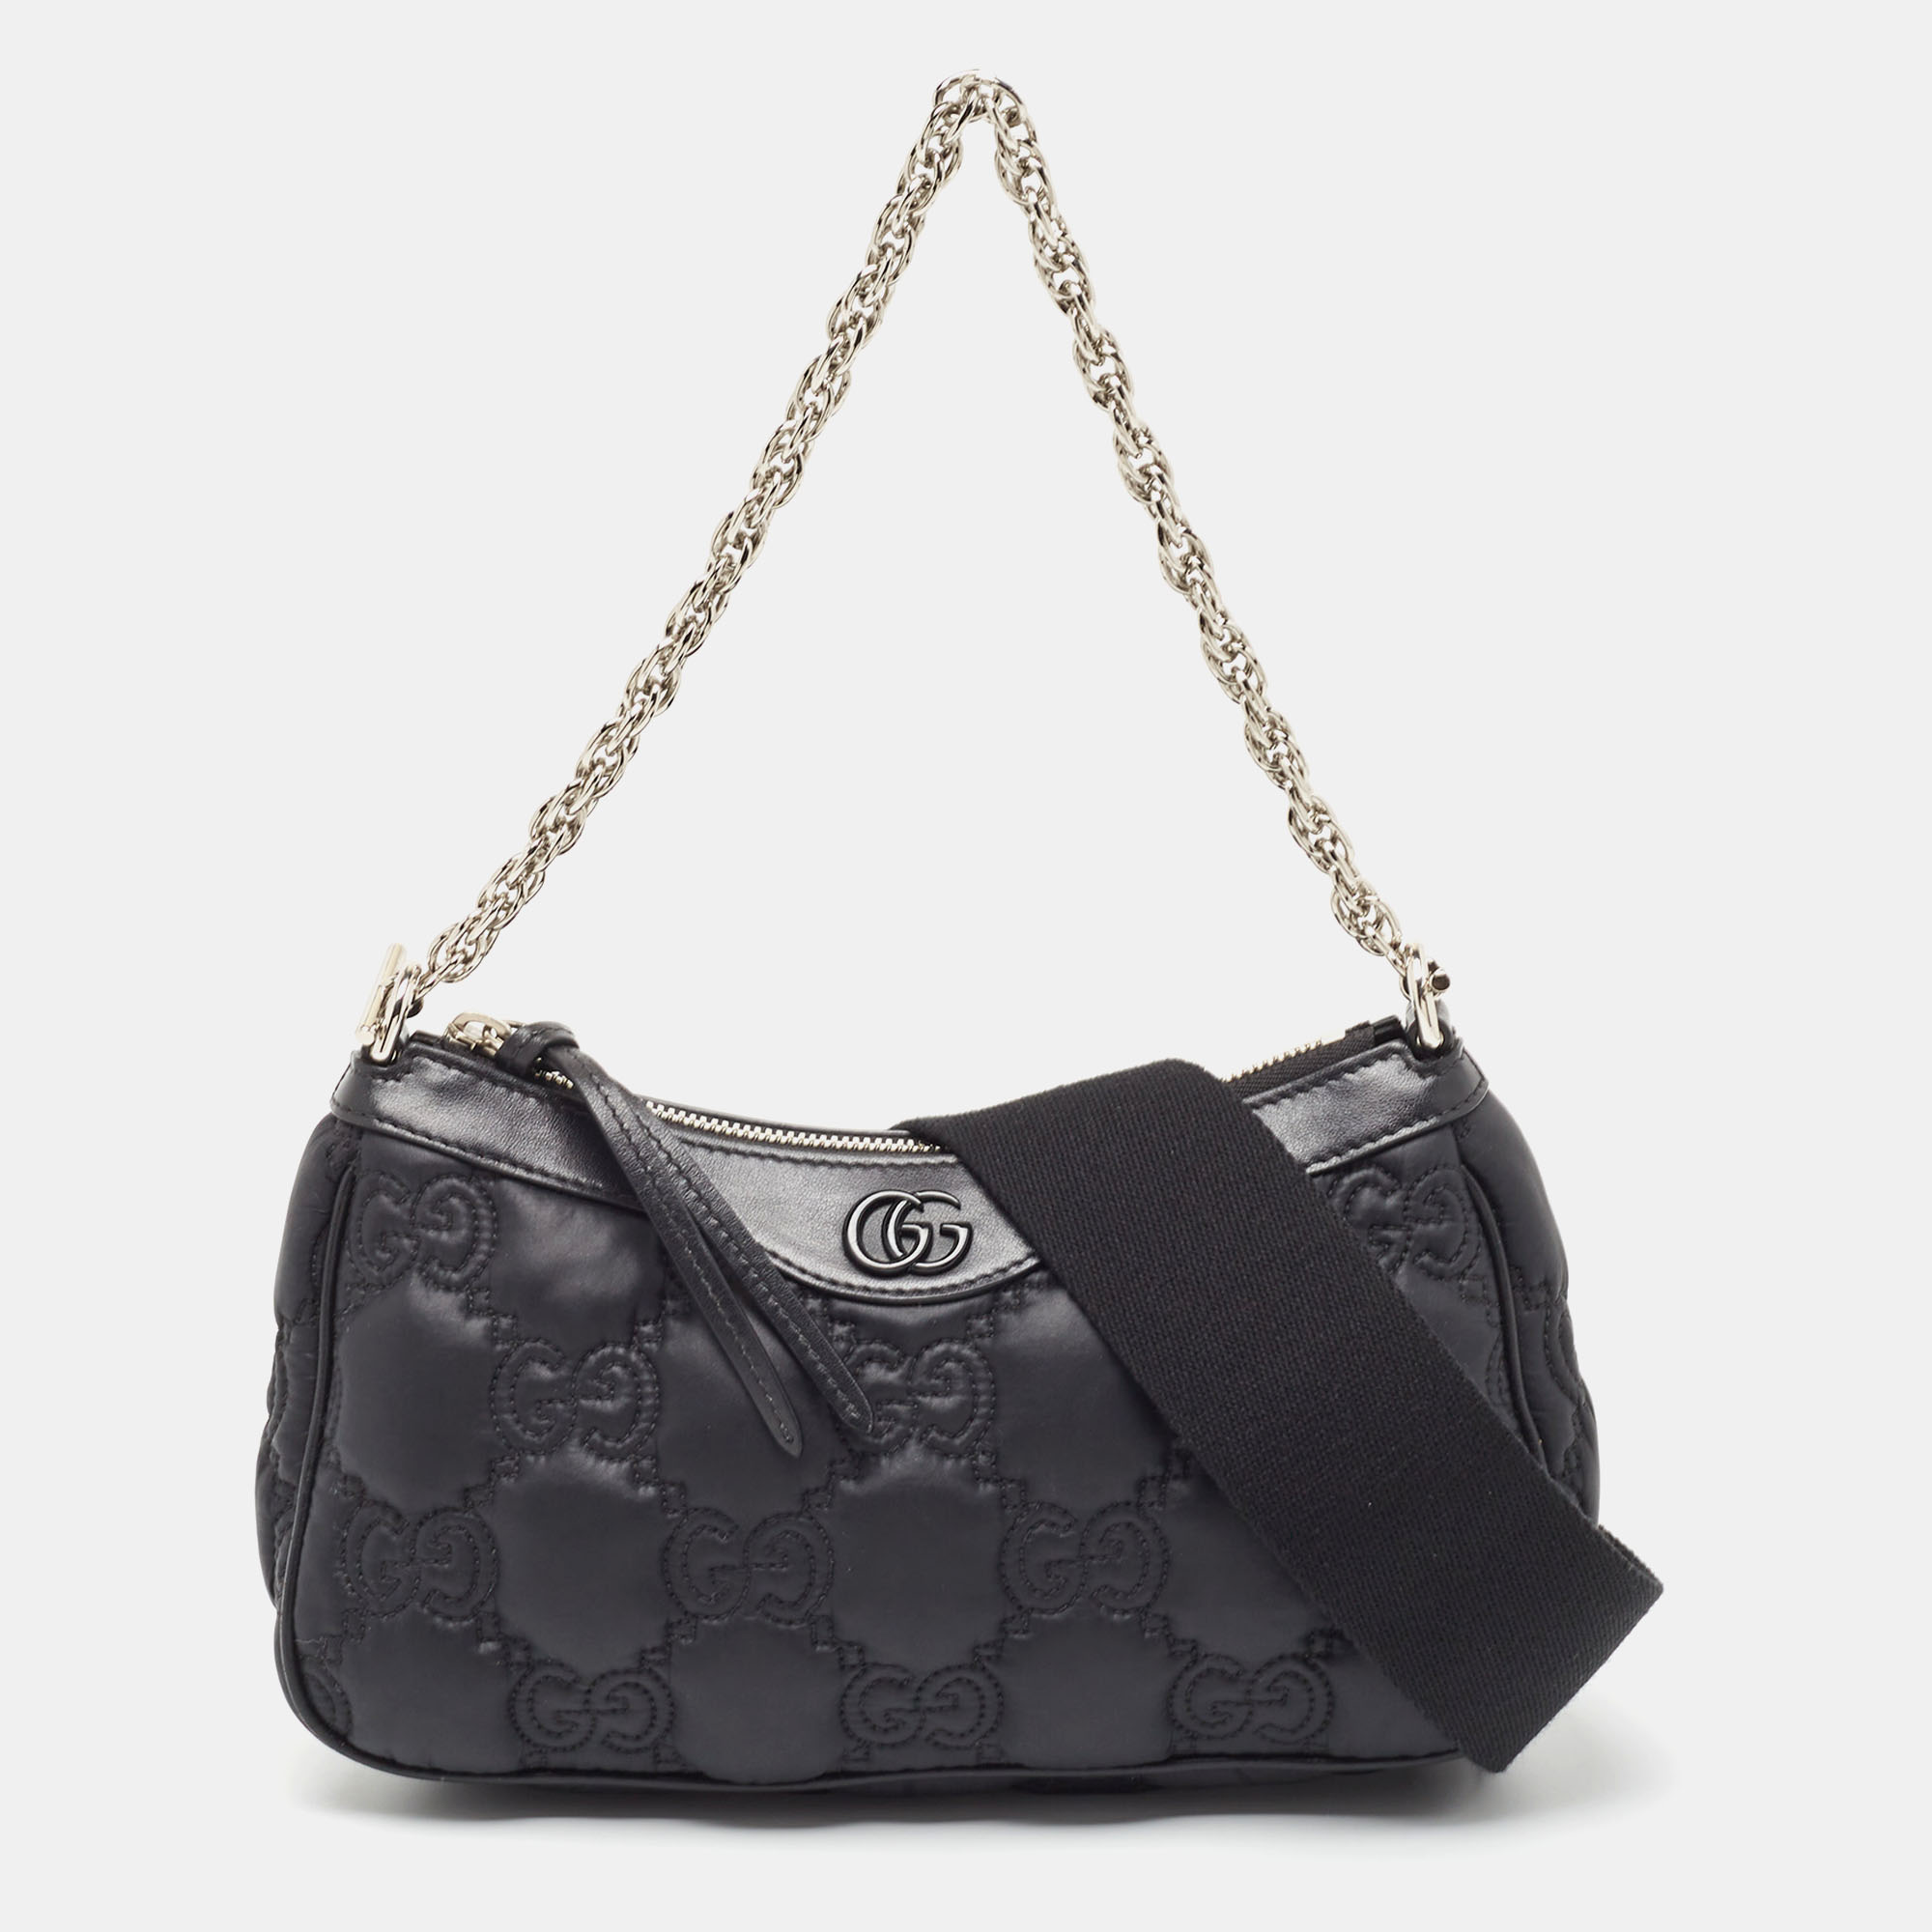 Gucci Black GG Matelassé Satin And Leather Chain Bag